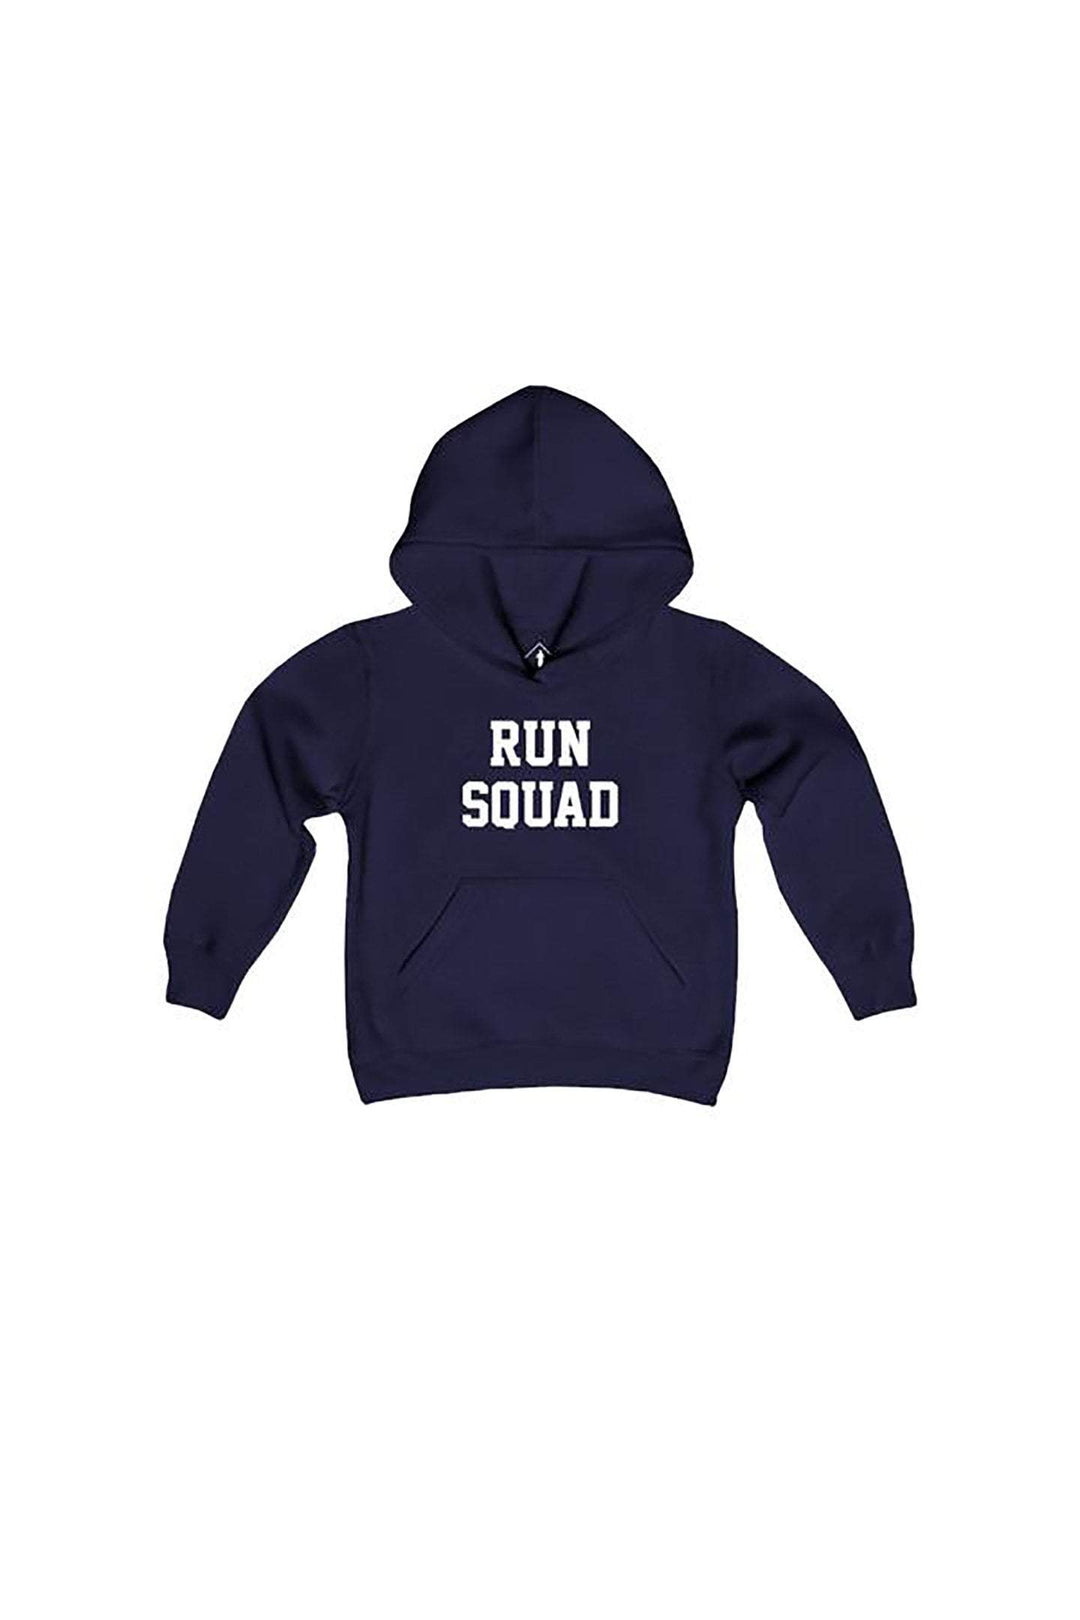 Run Squad Youth Hoodie - Sarah Marie Design Studio